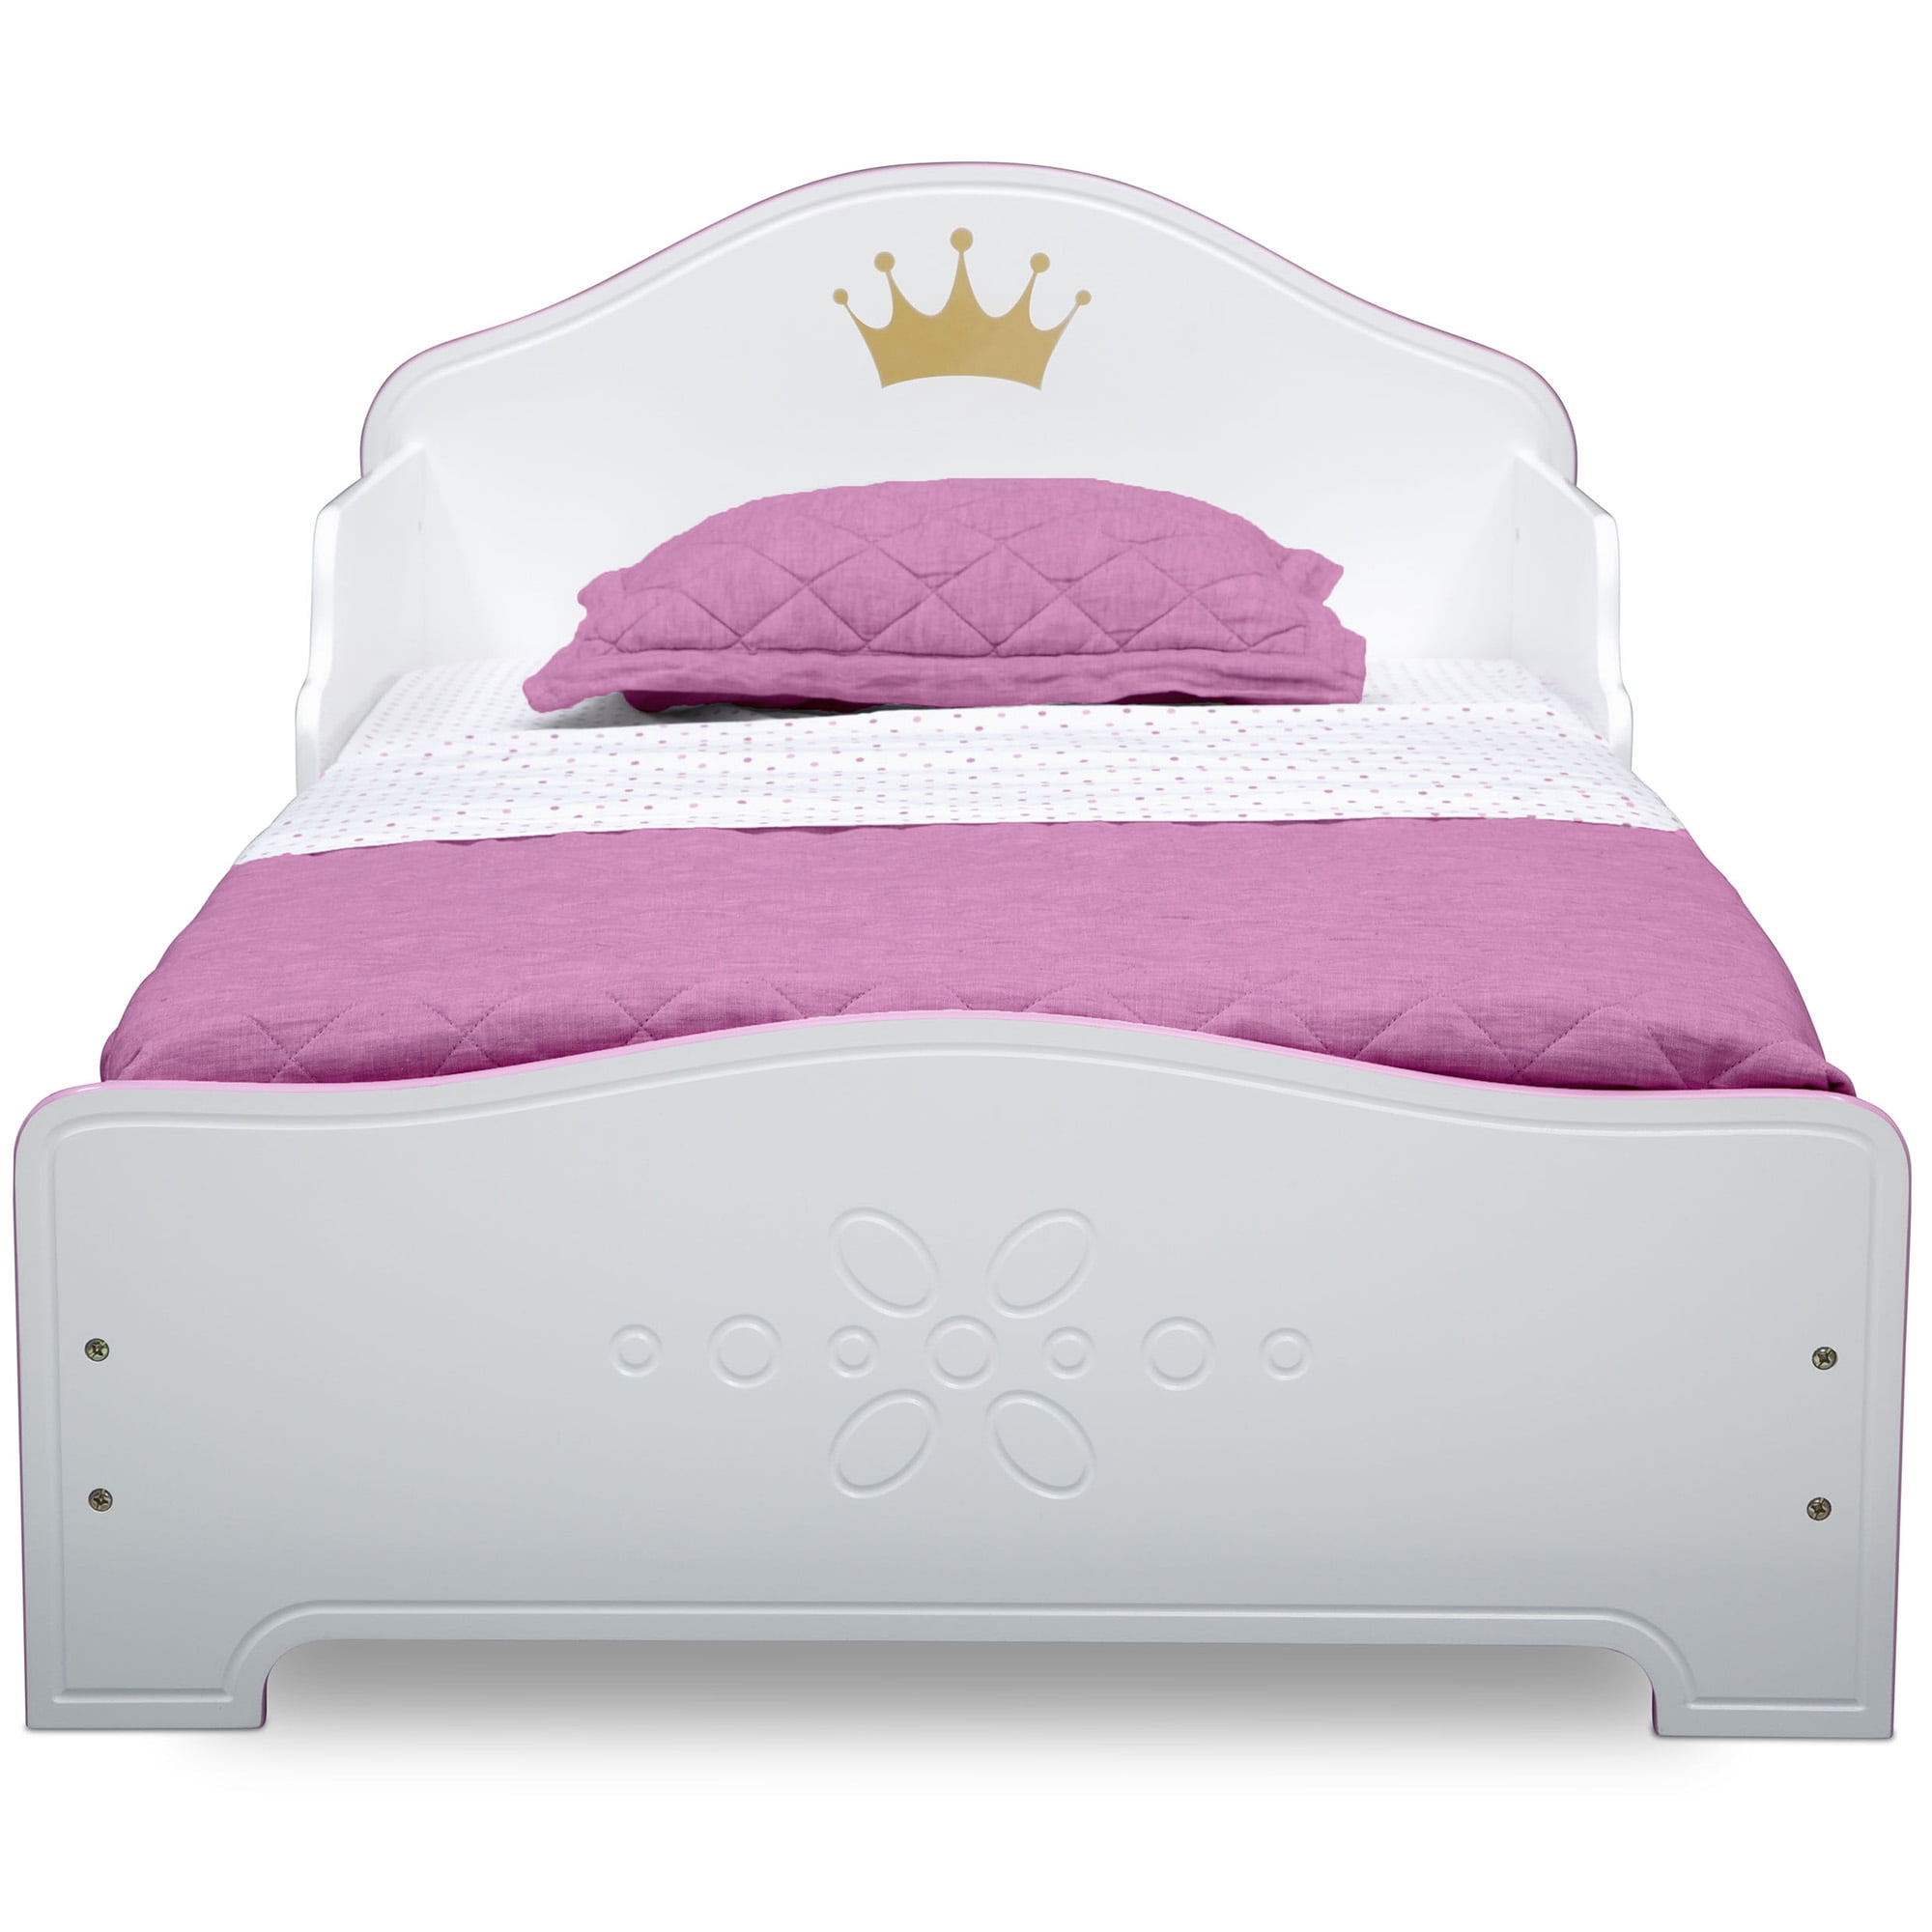 Wooden Princess Toddler Bed / Kidkraft Princess Toddler Bed Product